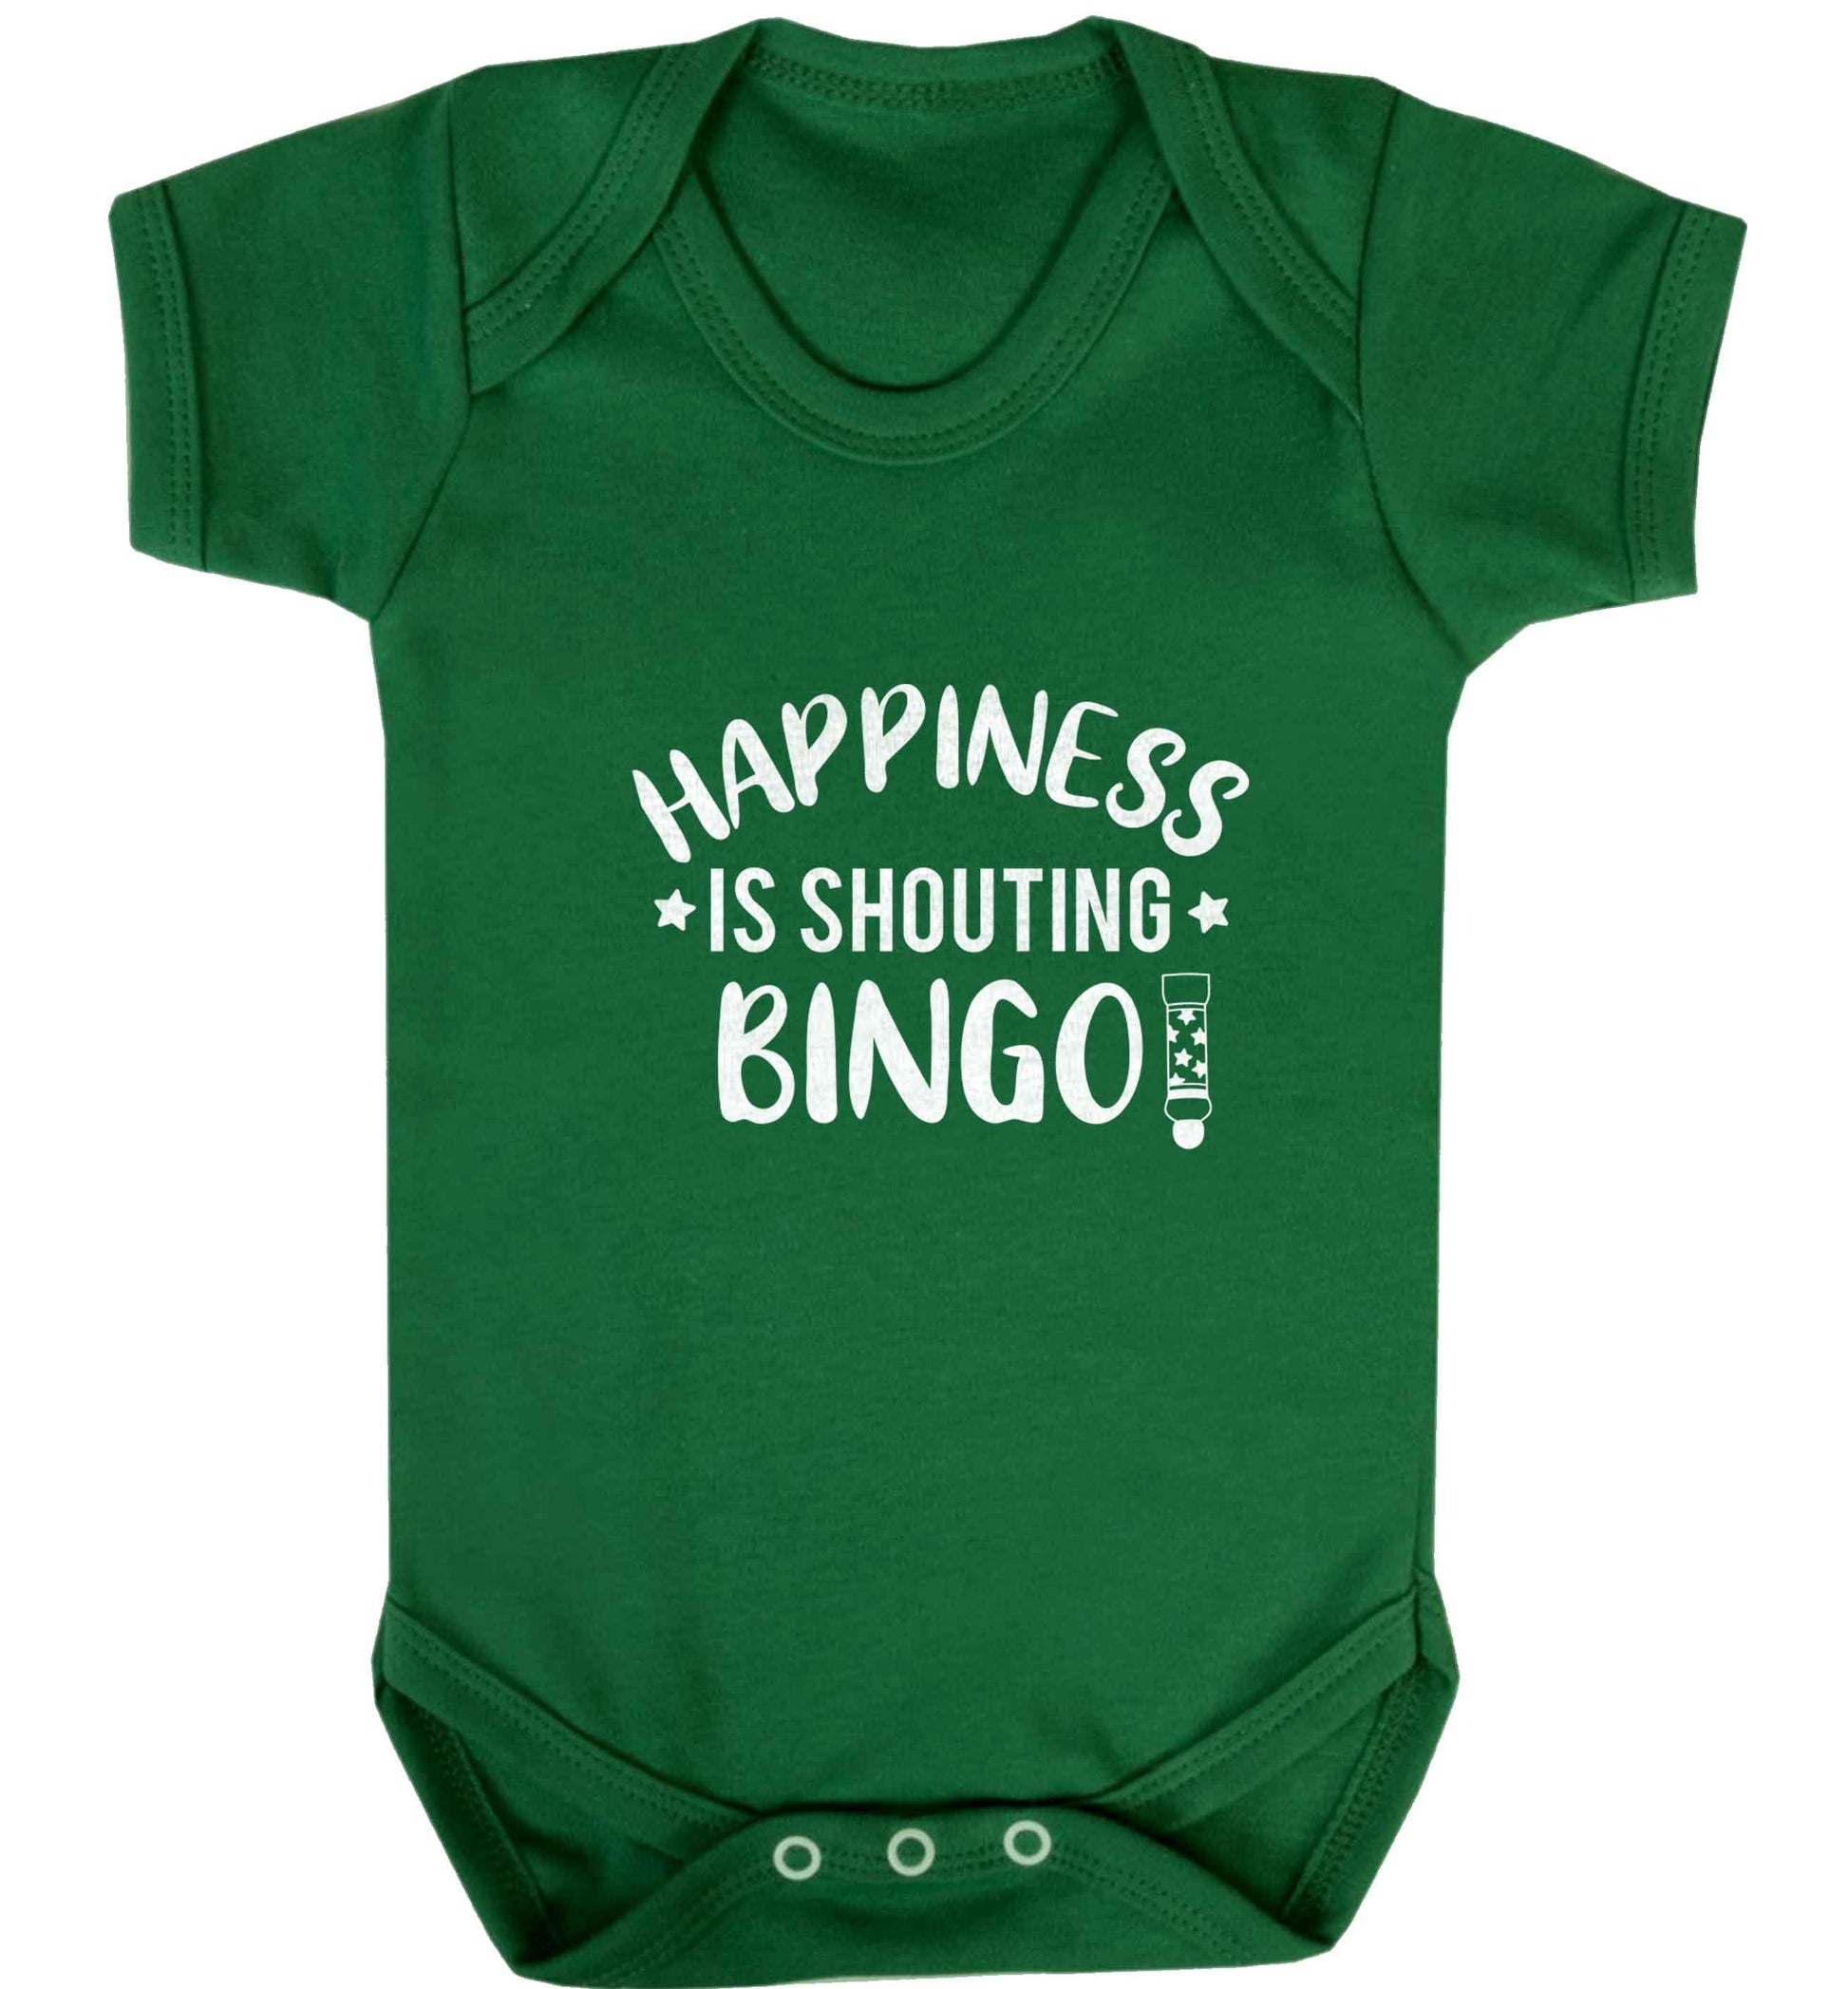 Happiness is shouting bingo! baby vest green 18-24 months